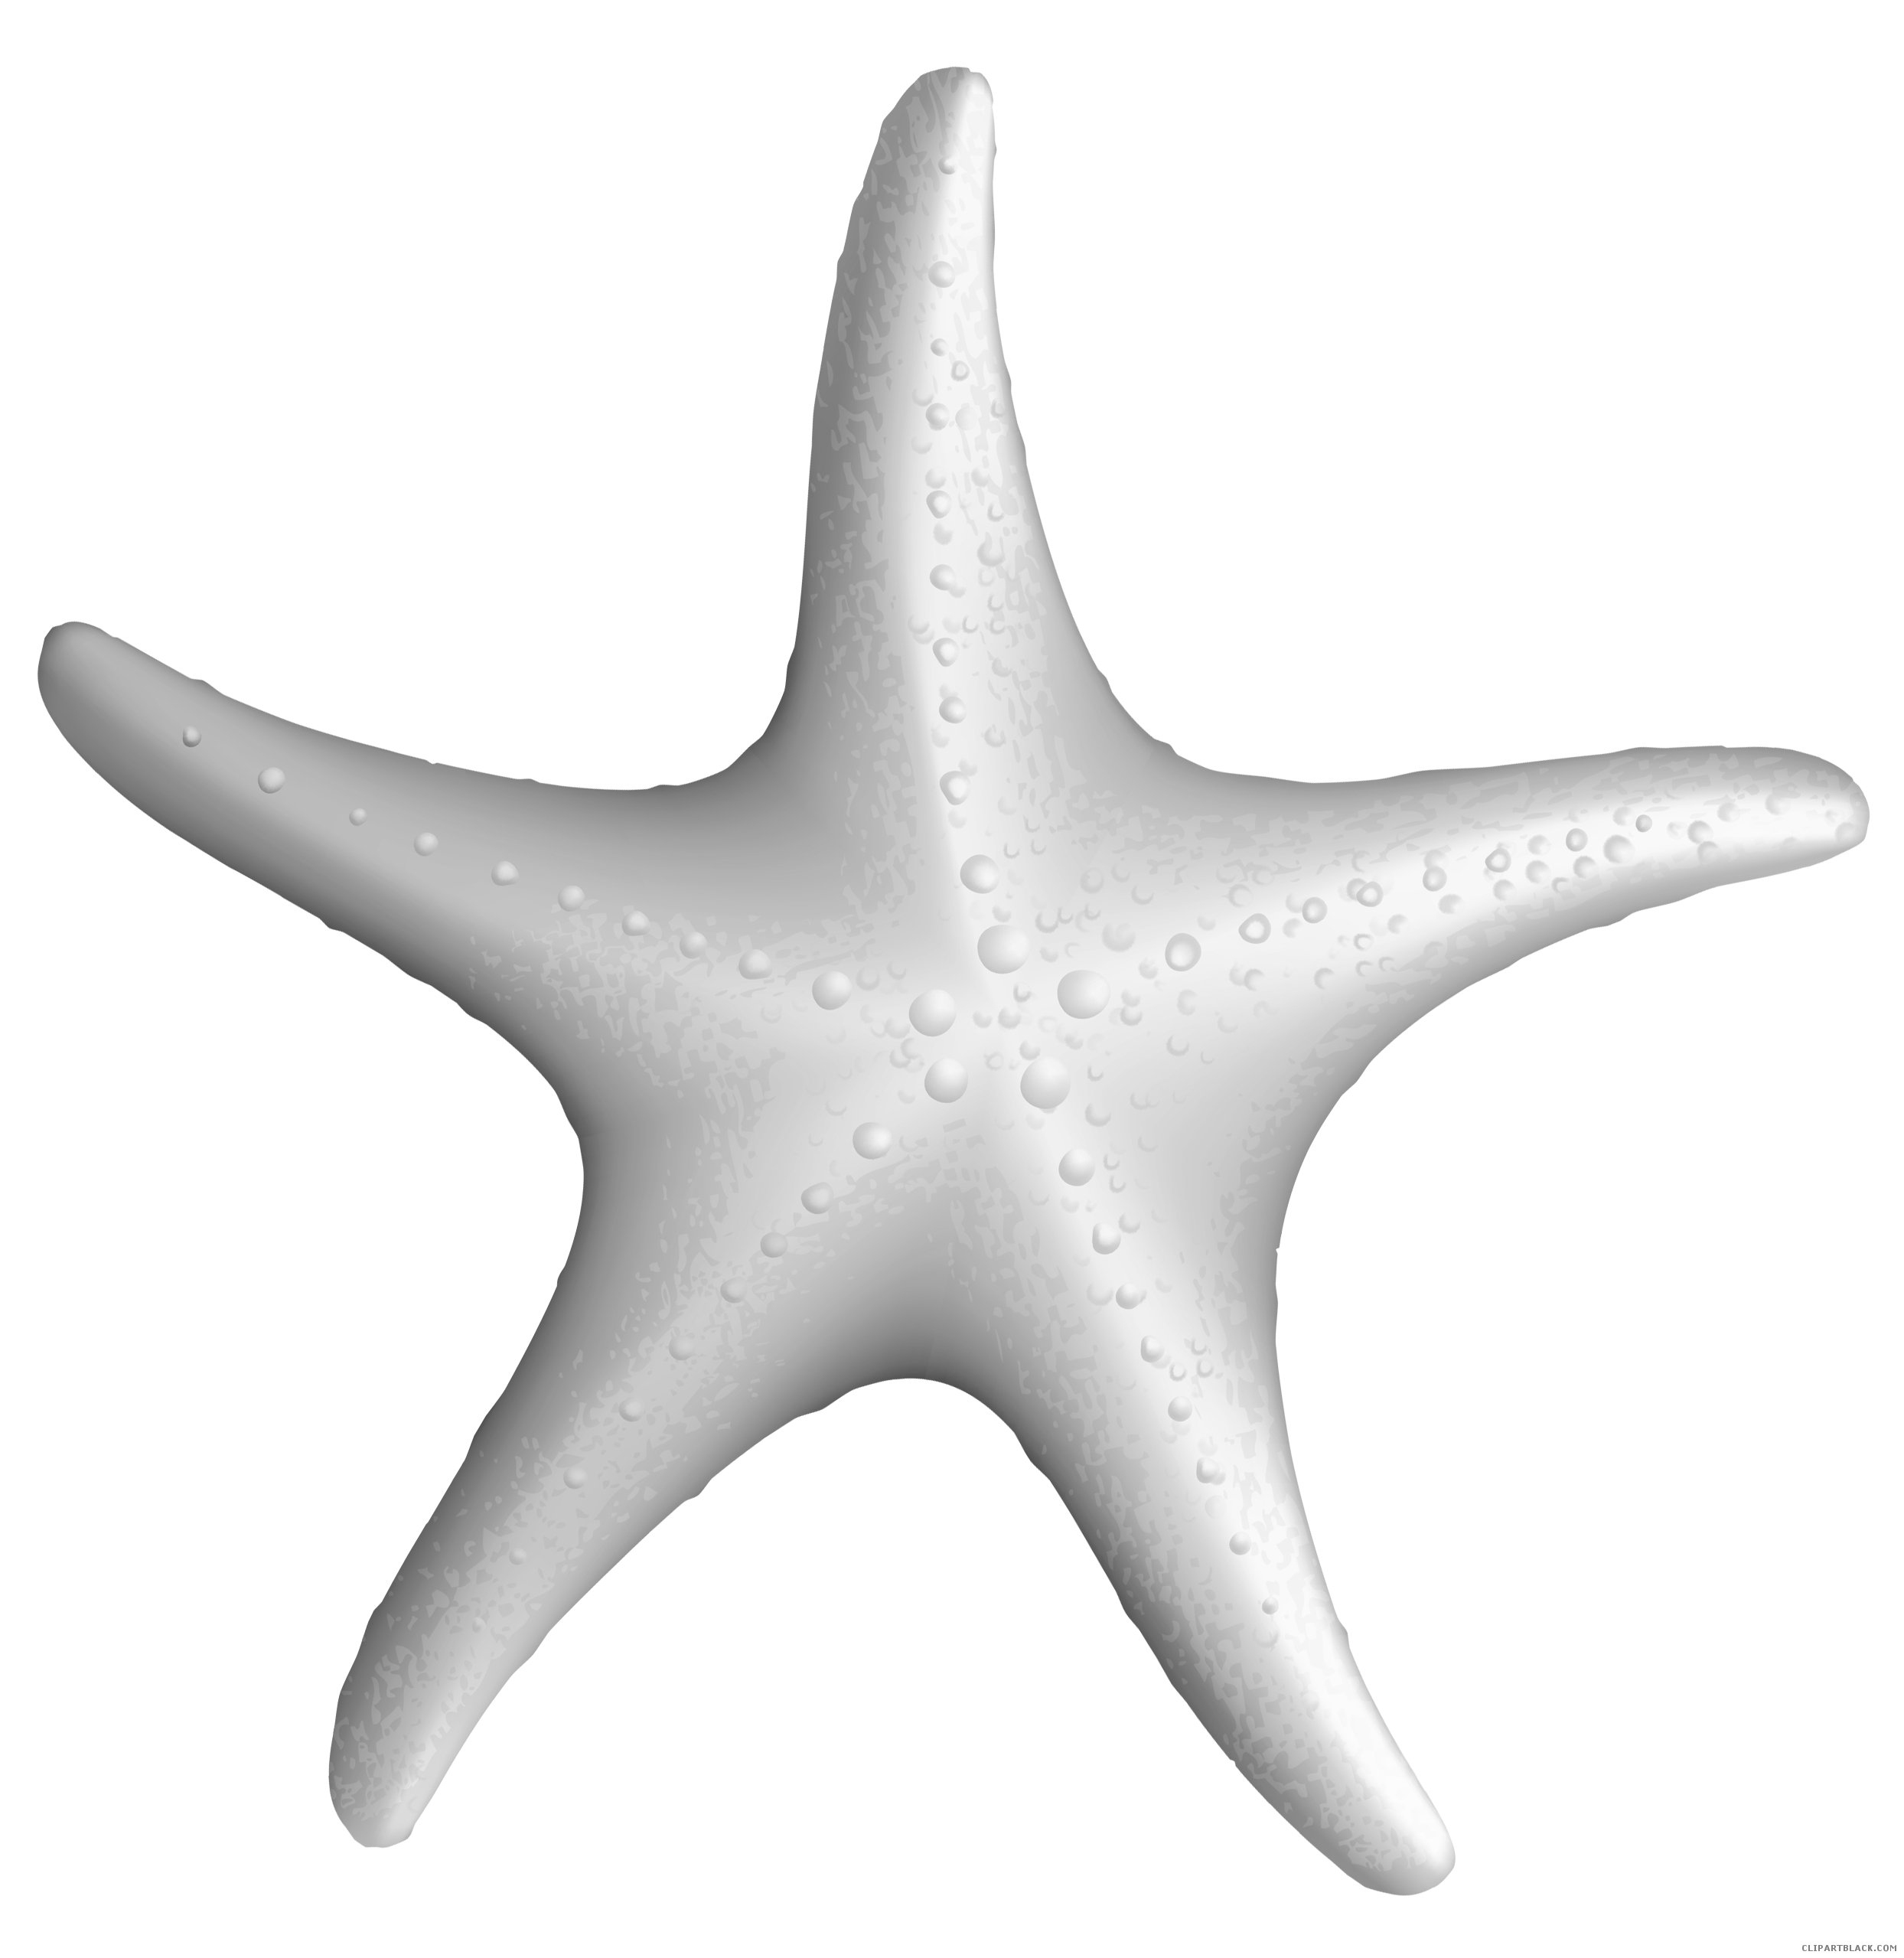 Starfish clipart black.